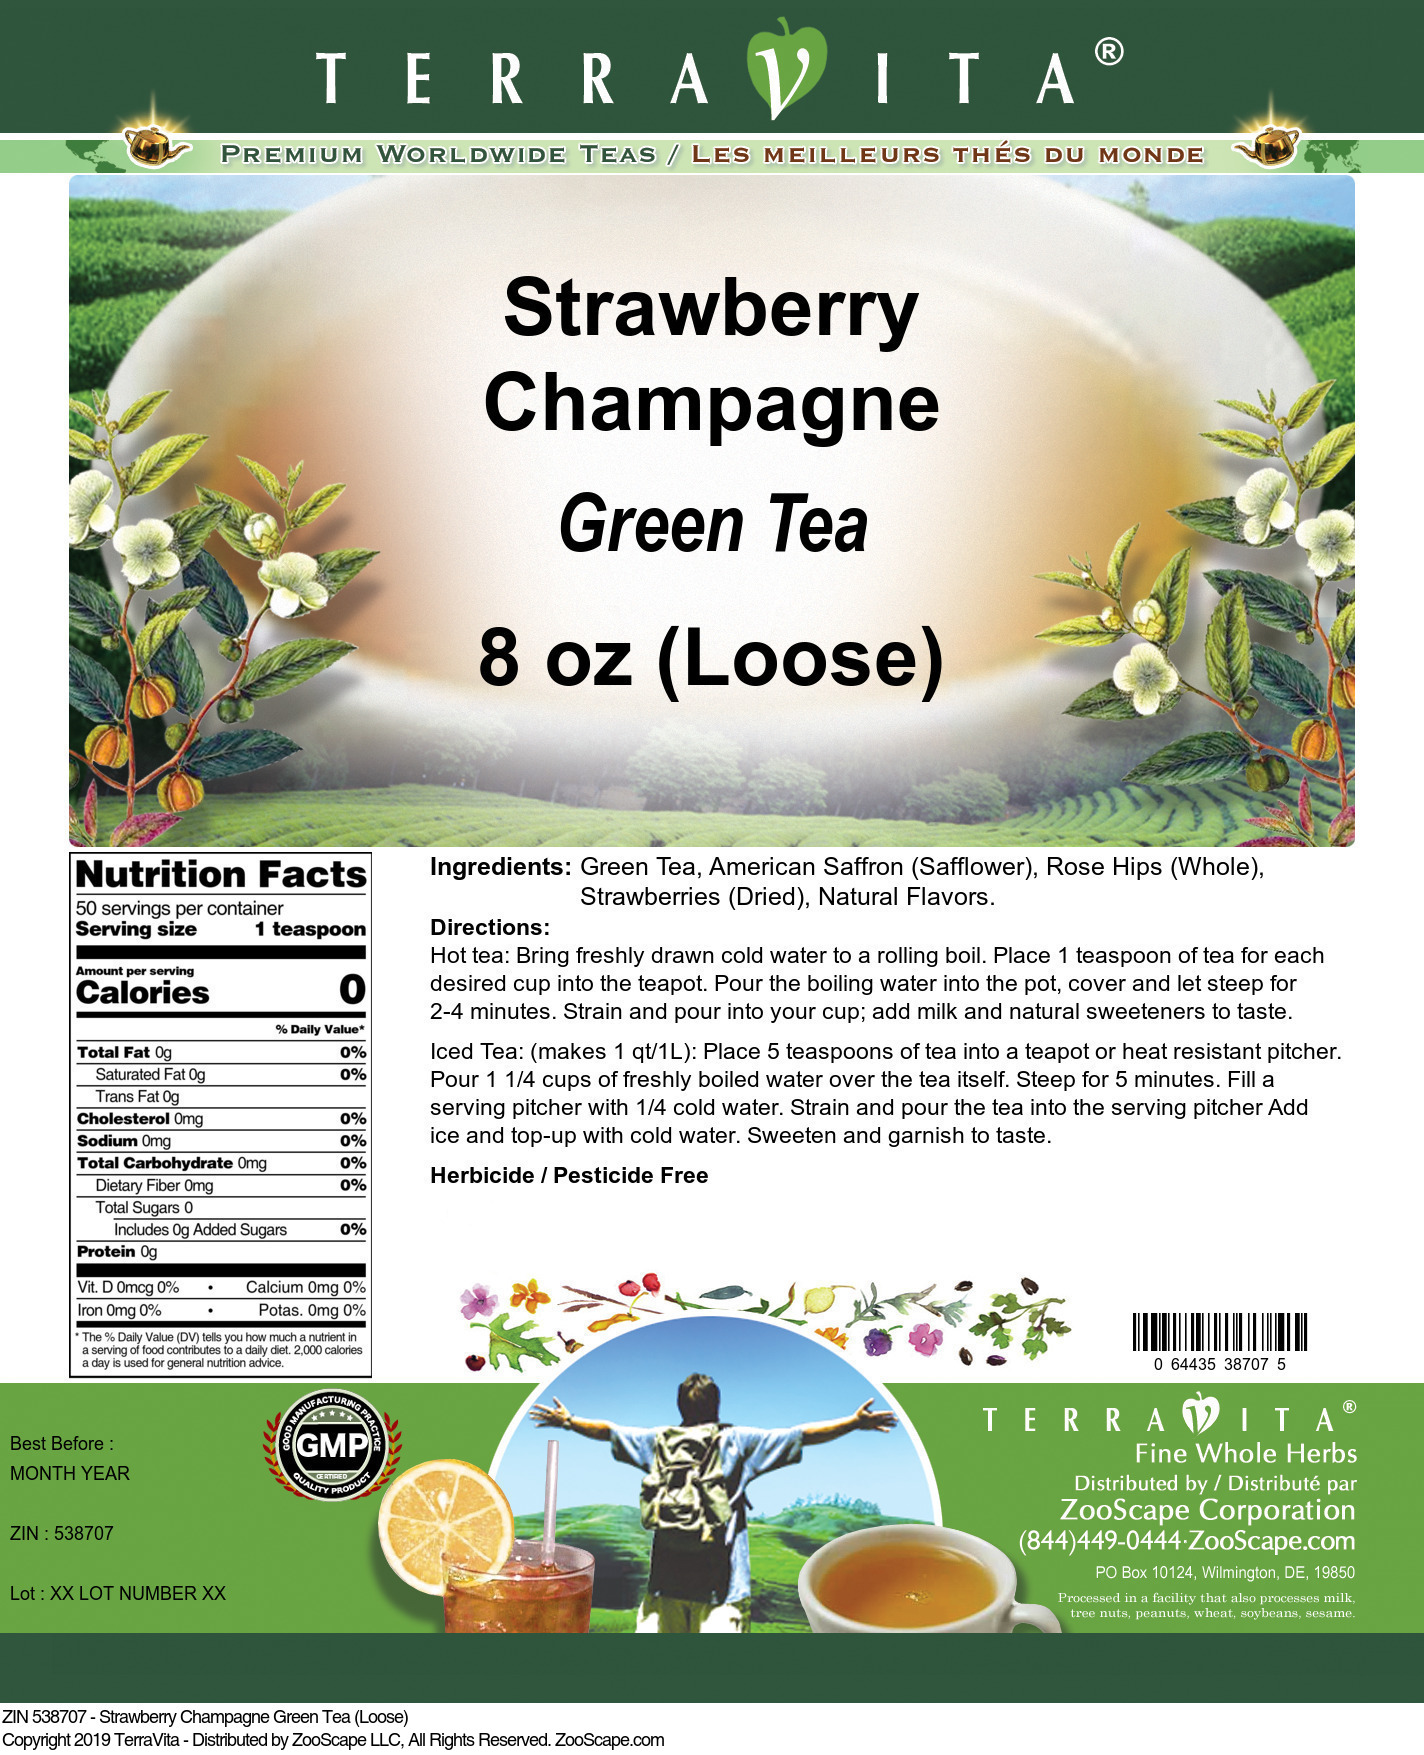 Strawberry Champagne Green Tea (Loose) - Label